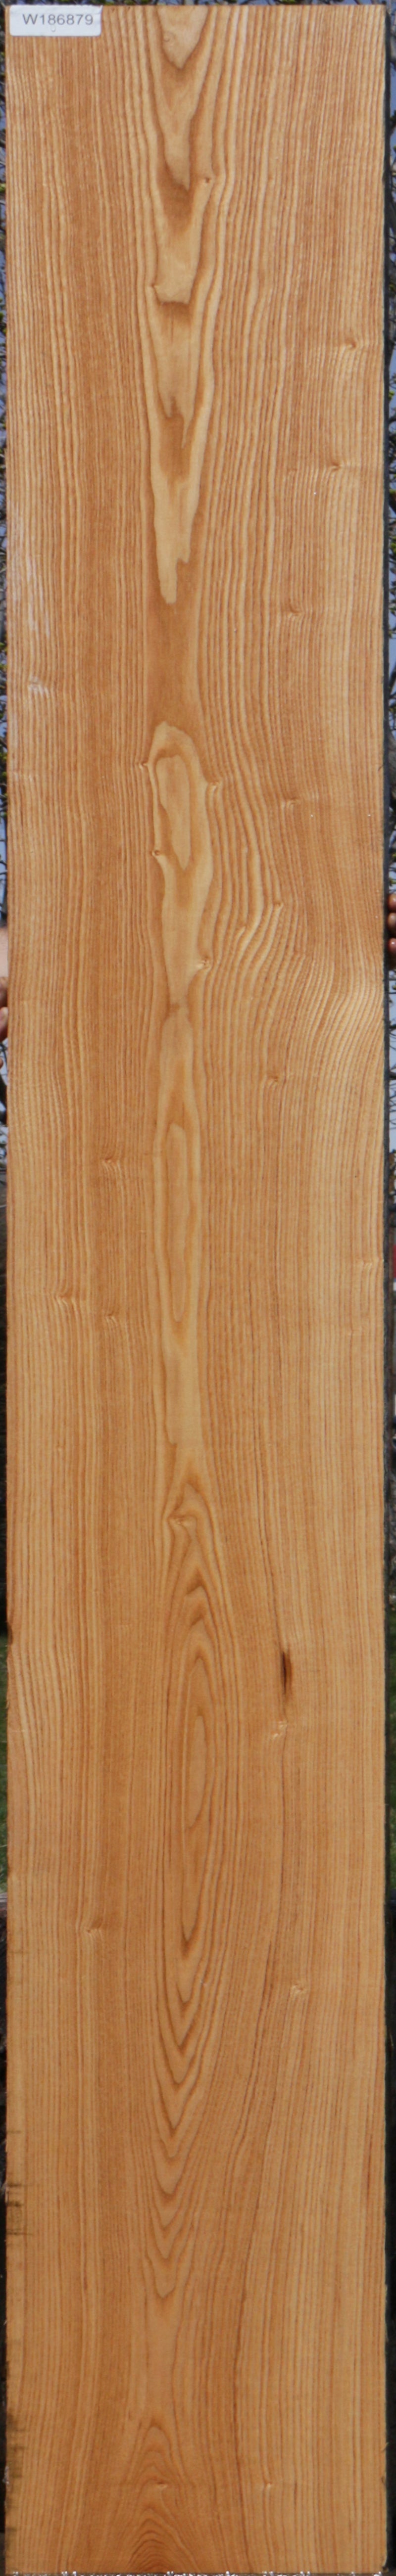 Honey Locust Slab LE2259-5B - 9/4 - 7.5' Irion Lumber Company